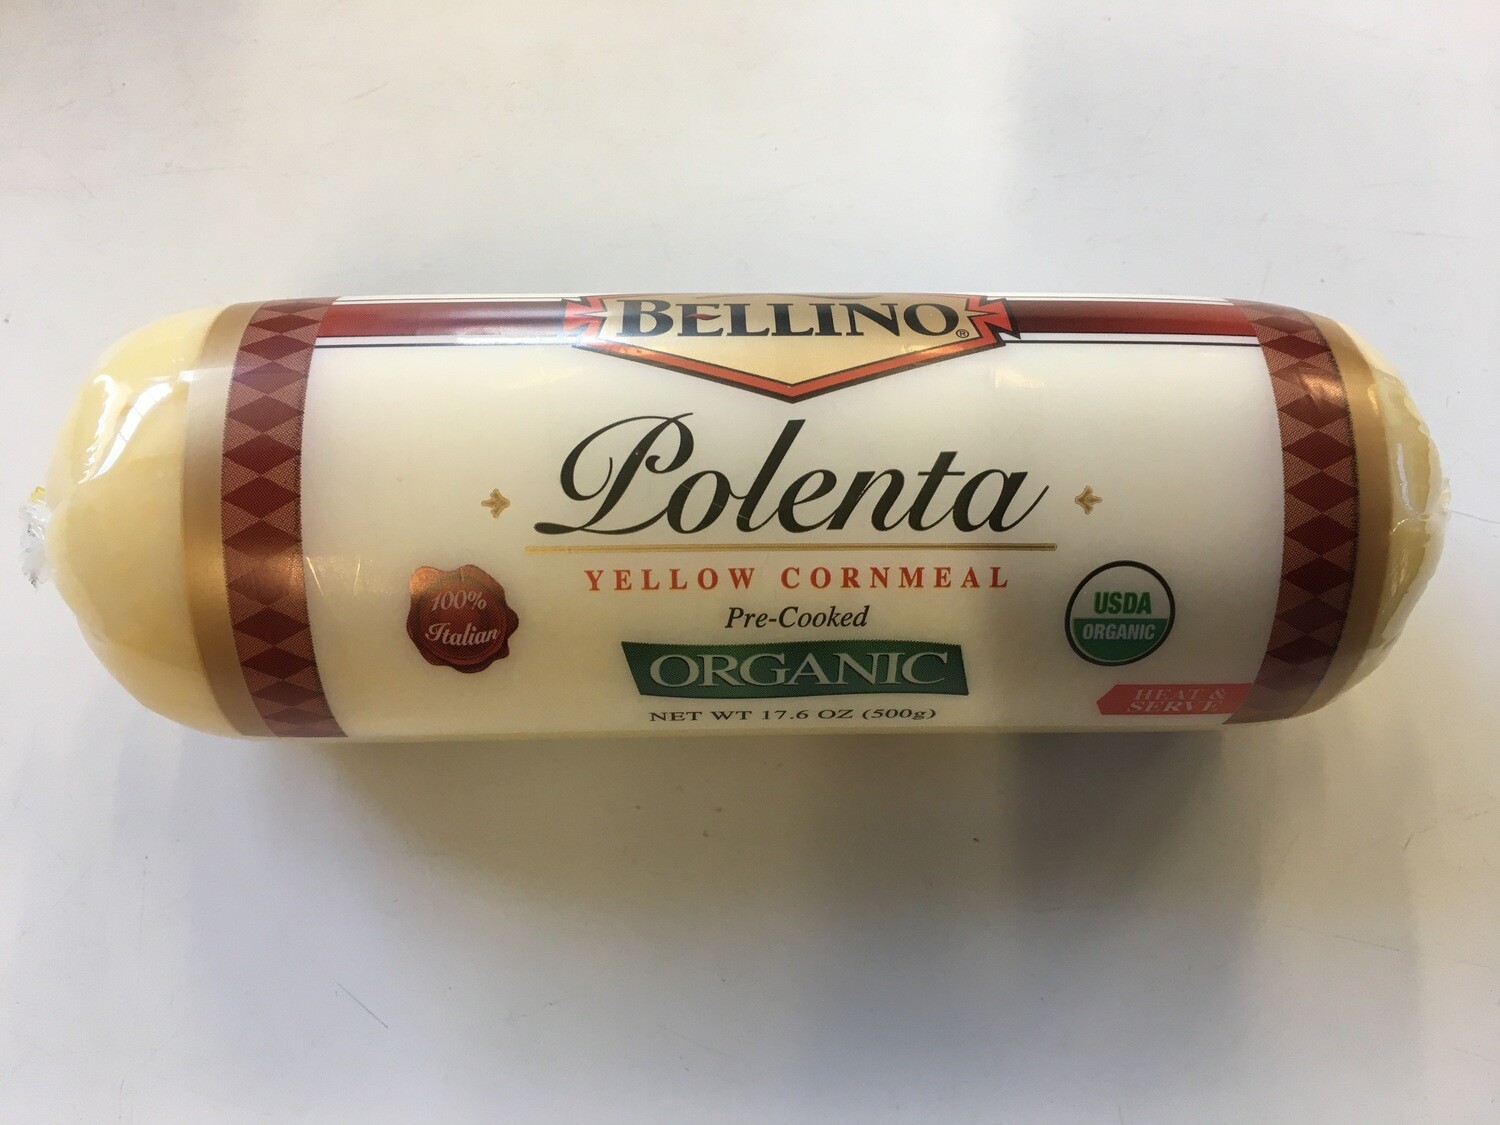 Grocery / Pasta / Bellino Polenta chub 17.6 oz